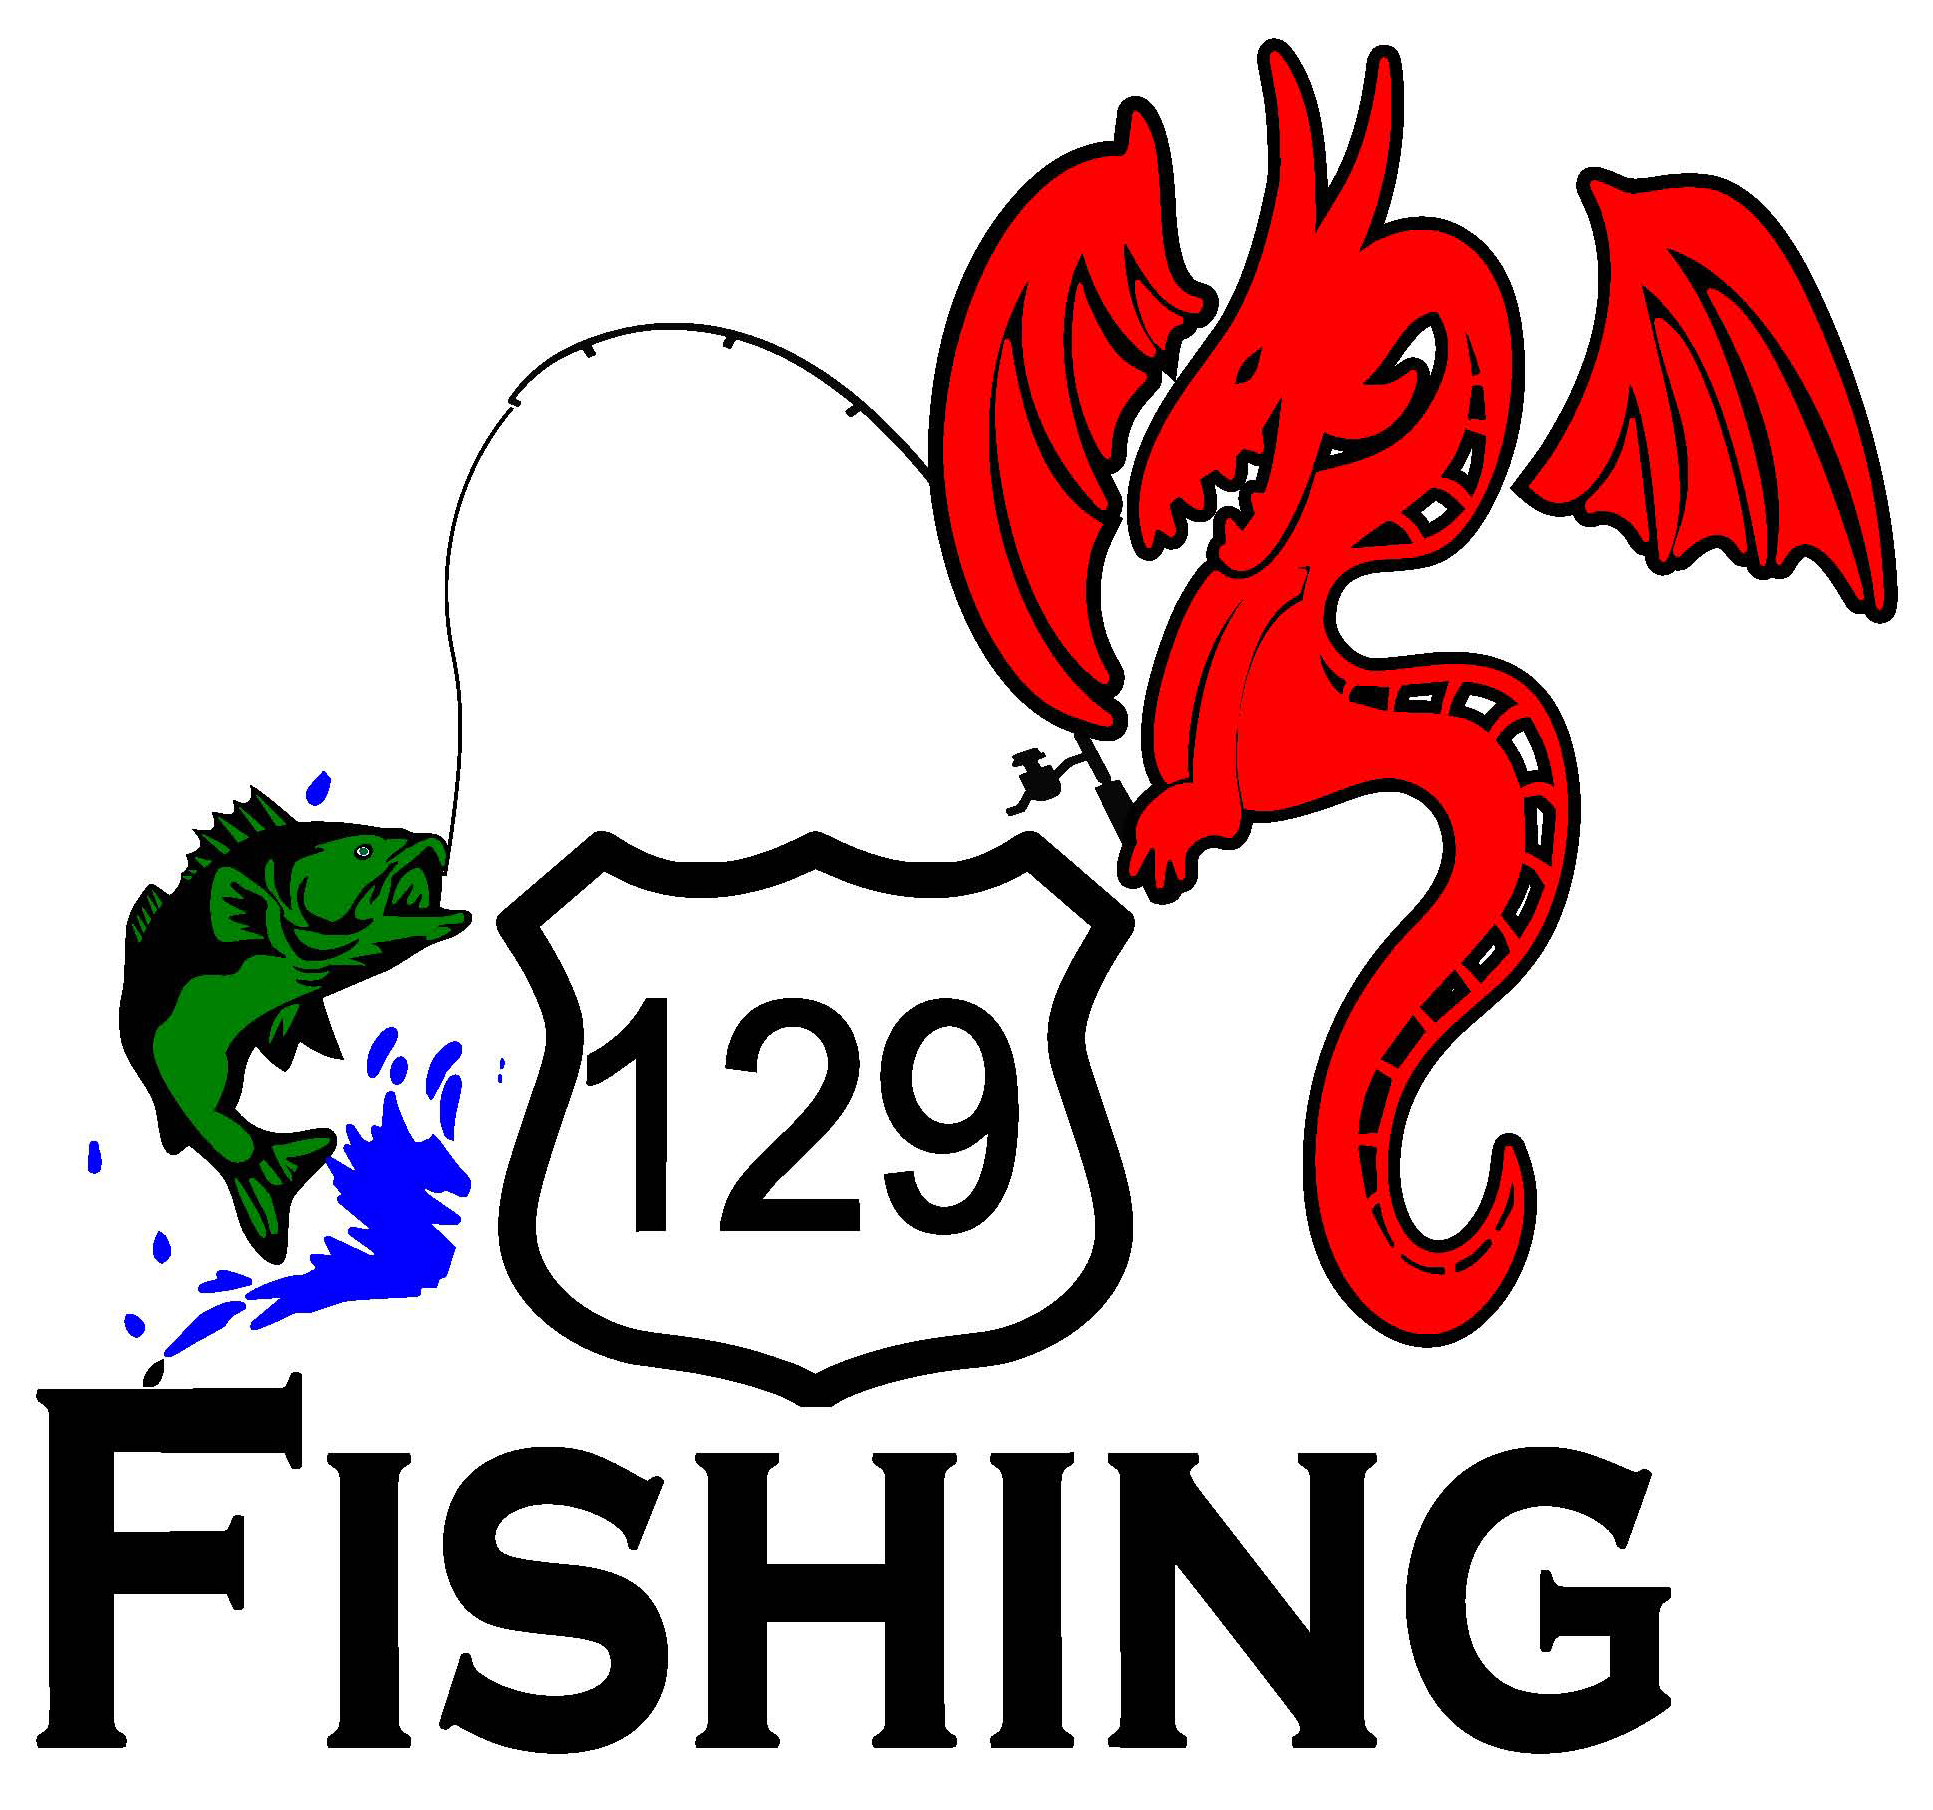 JENKO FISHING CRANK BAITS – 129 Fishing